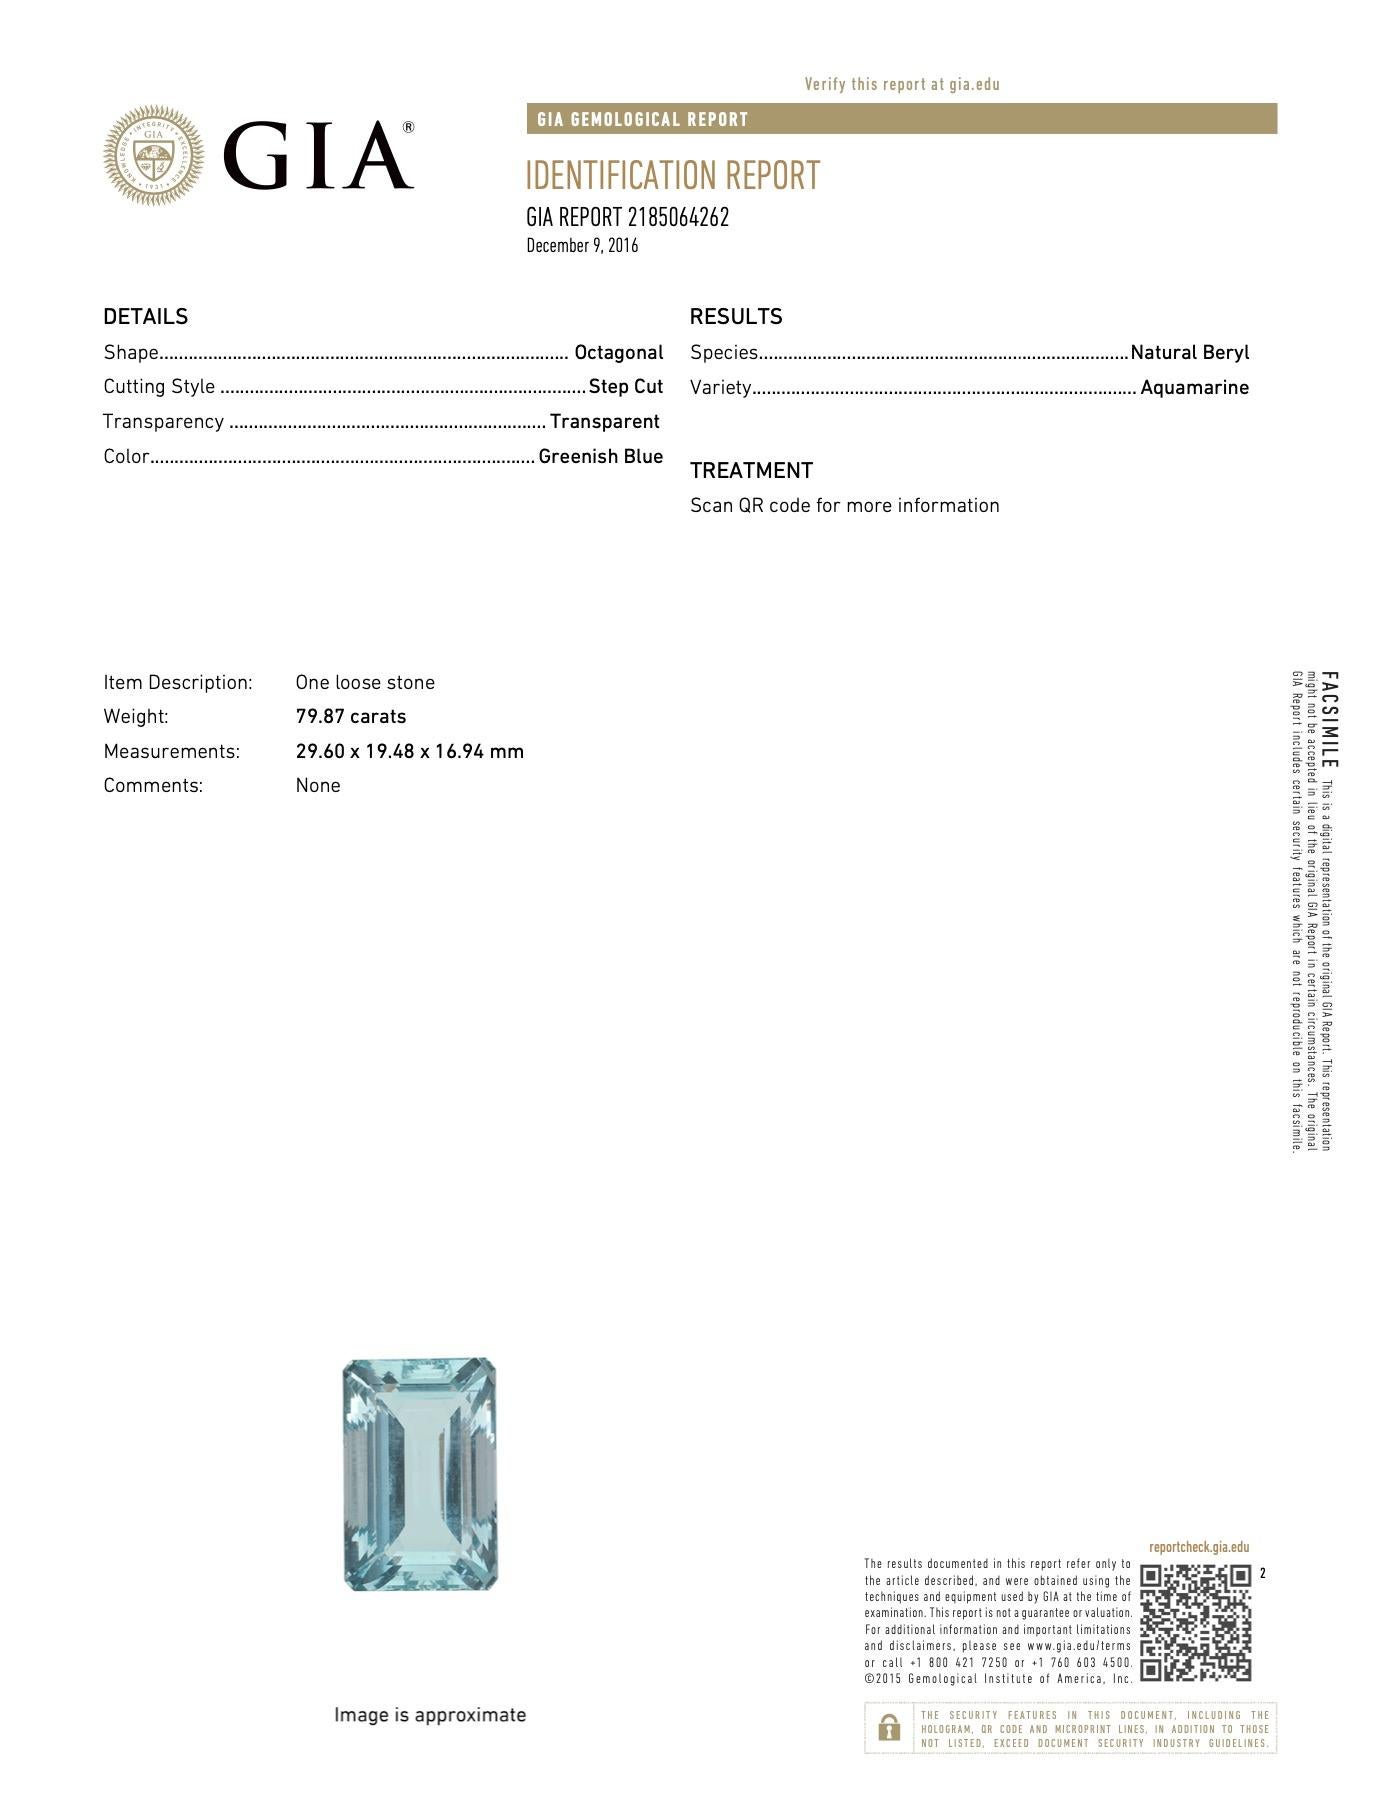 Emerald Cut Gia Certified 79.87 Carat Natural Aquamarine Pendant 18K Gold For Sale